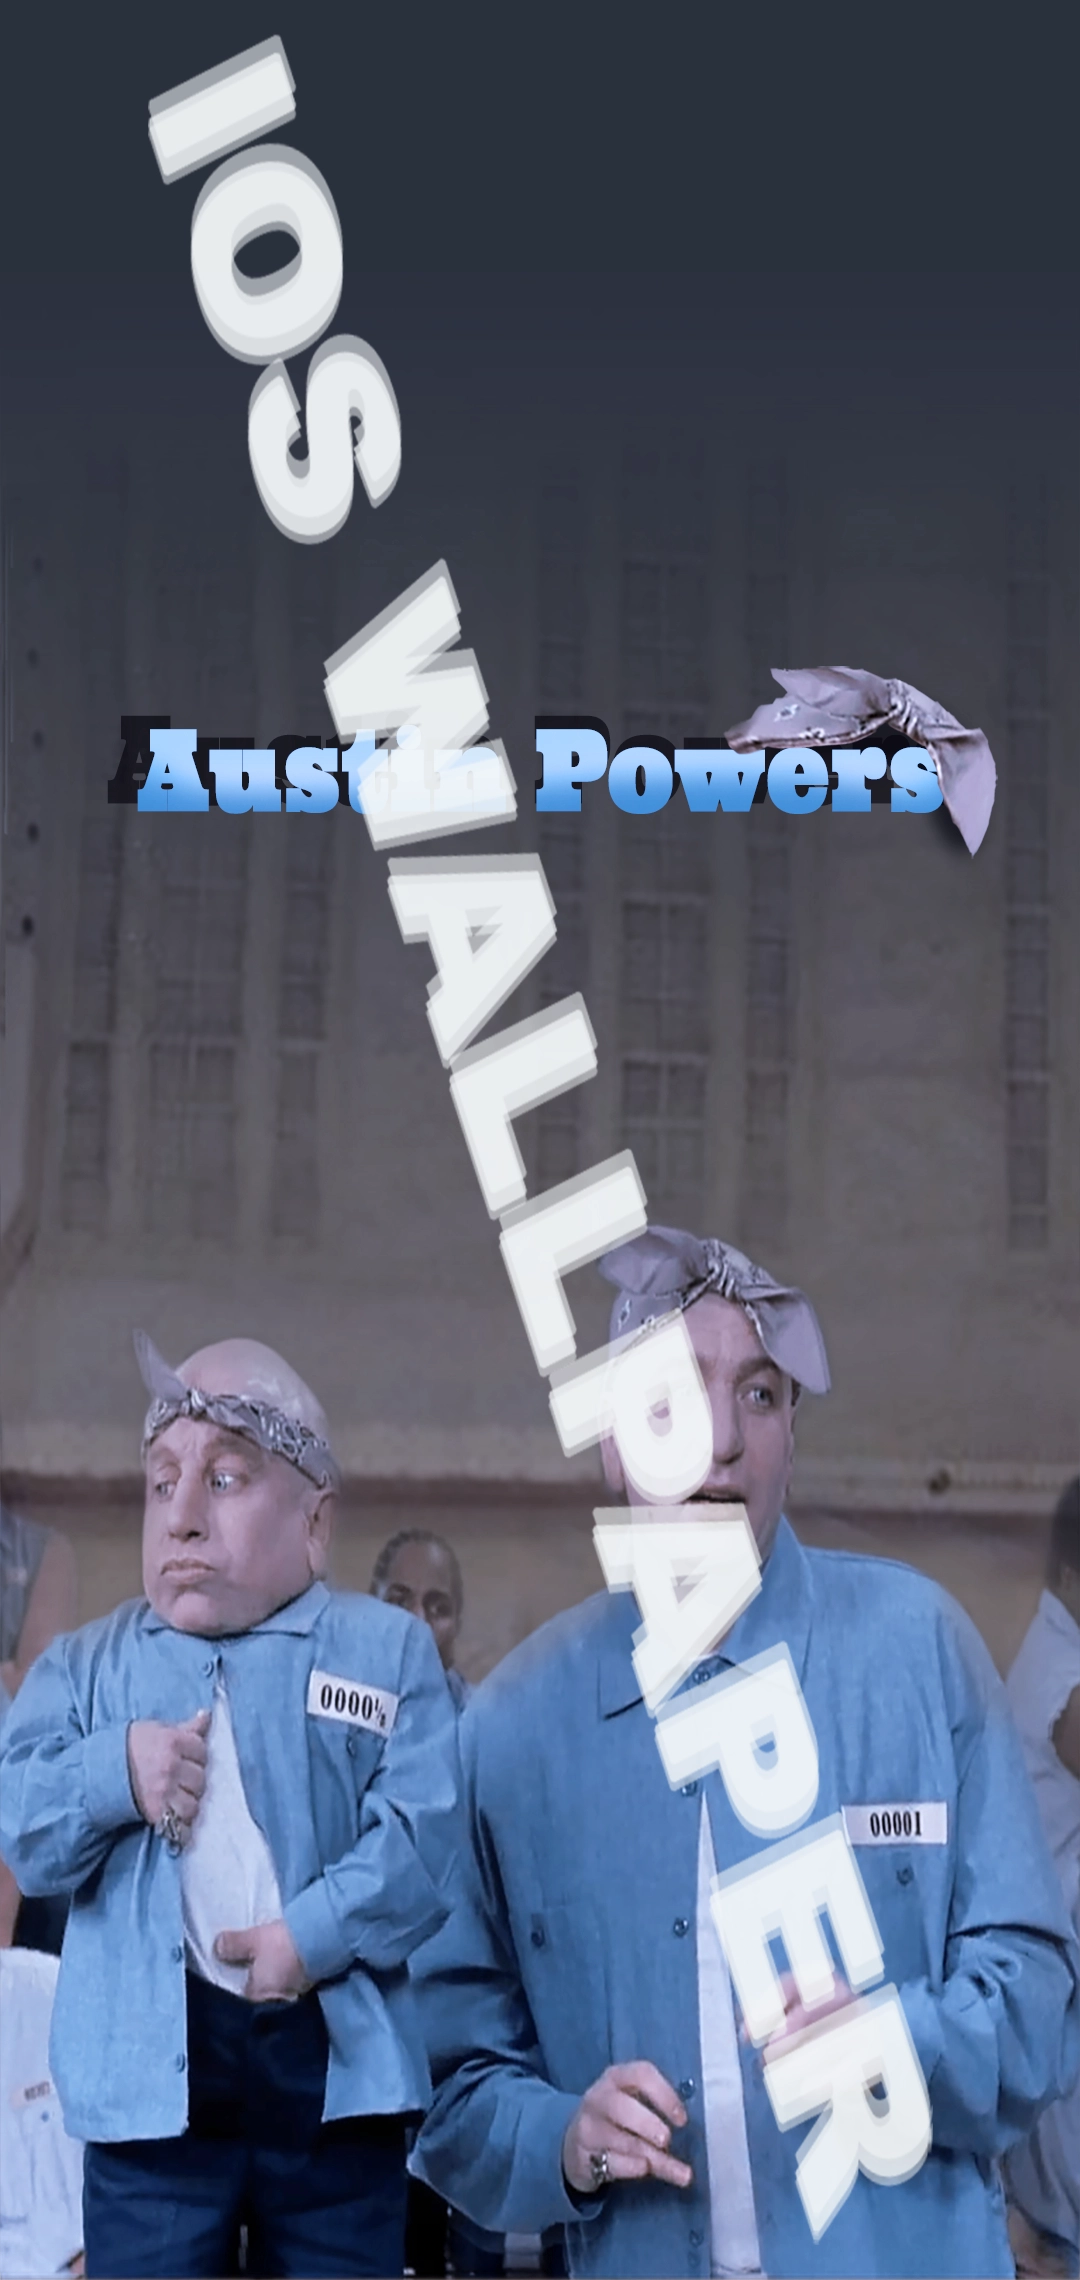 Dr. Evil & Mini Me (Austin Powers) - Plum's Digital Art